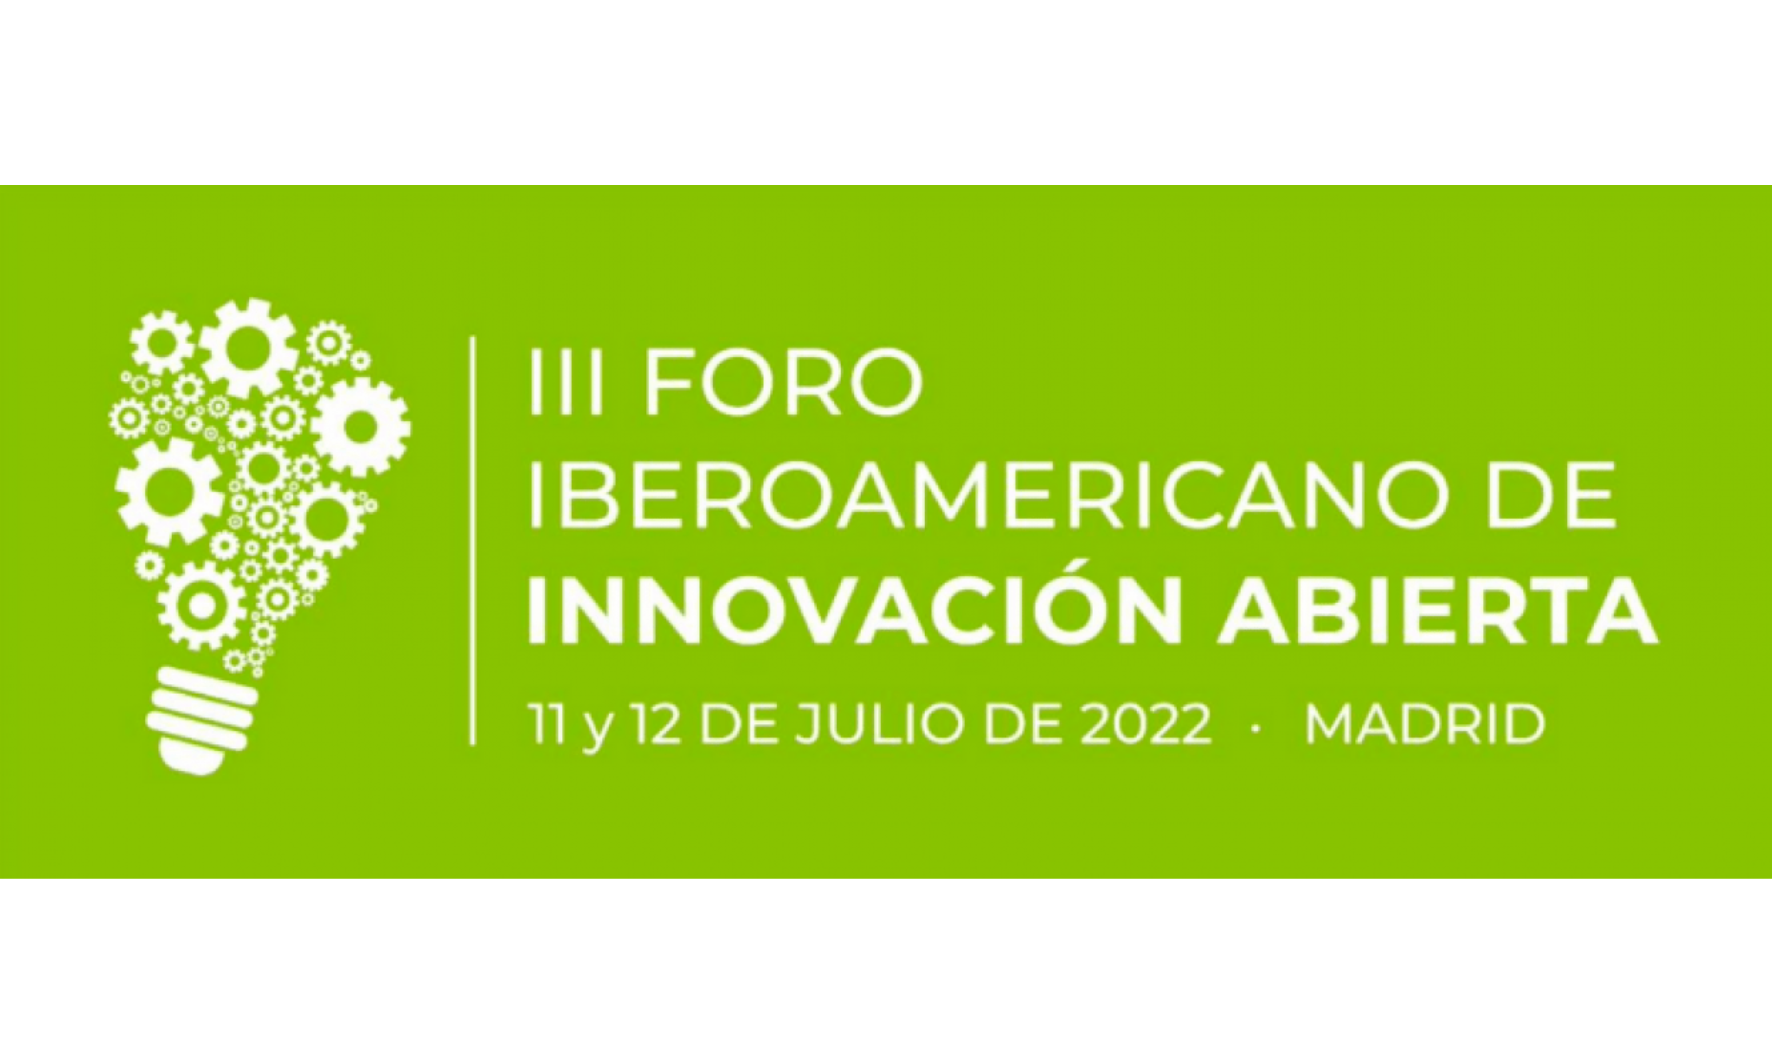 III Foro Iberoamericano de Innovación Abierta